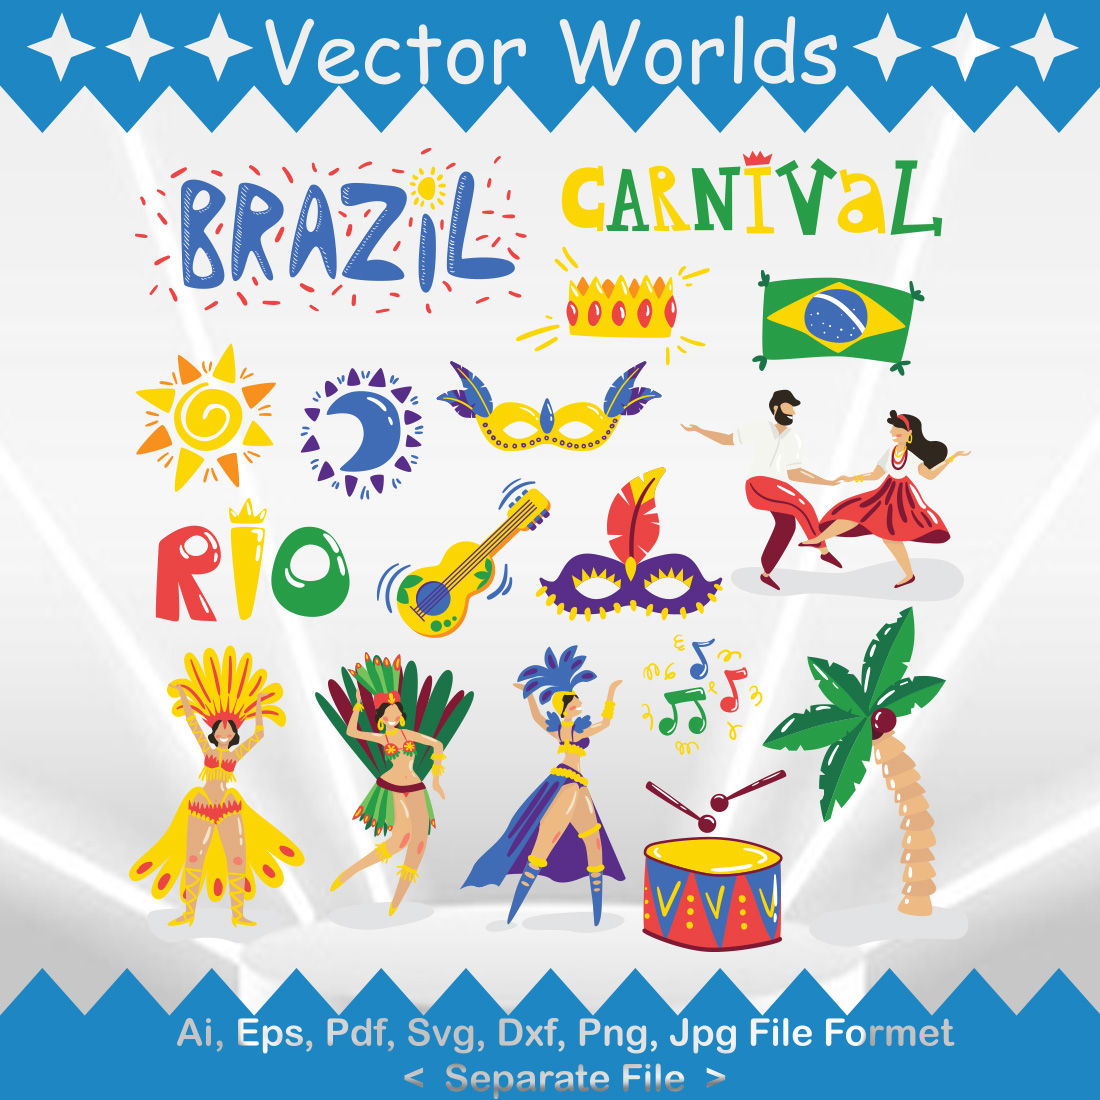 Carnival Of Brazil SVG Vector Design cover image.